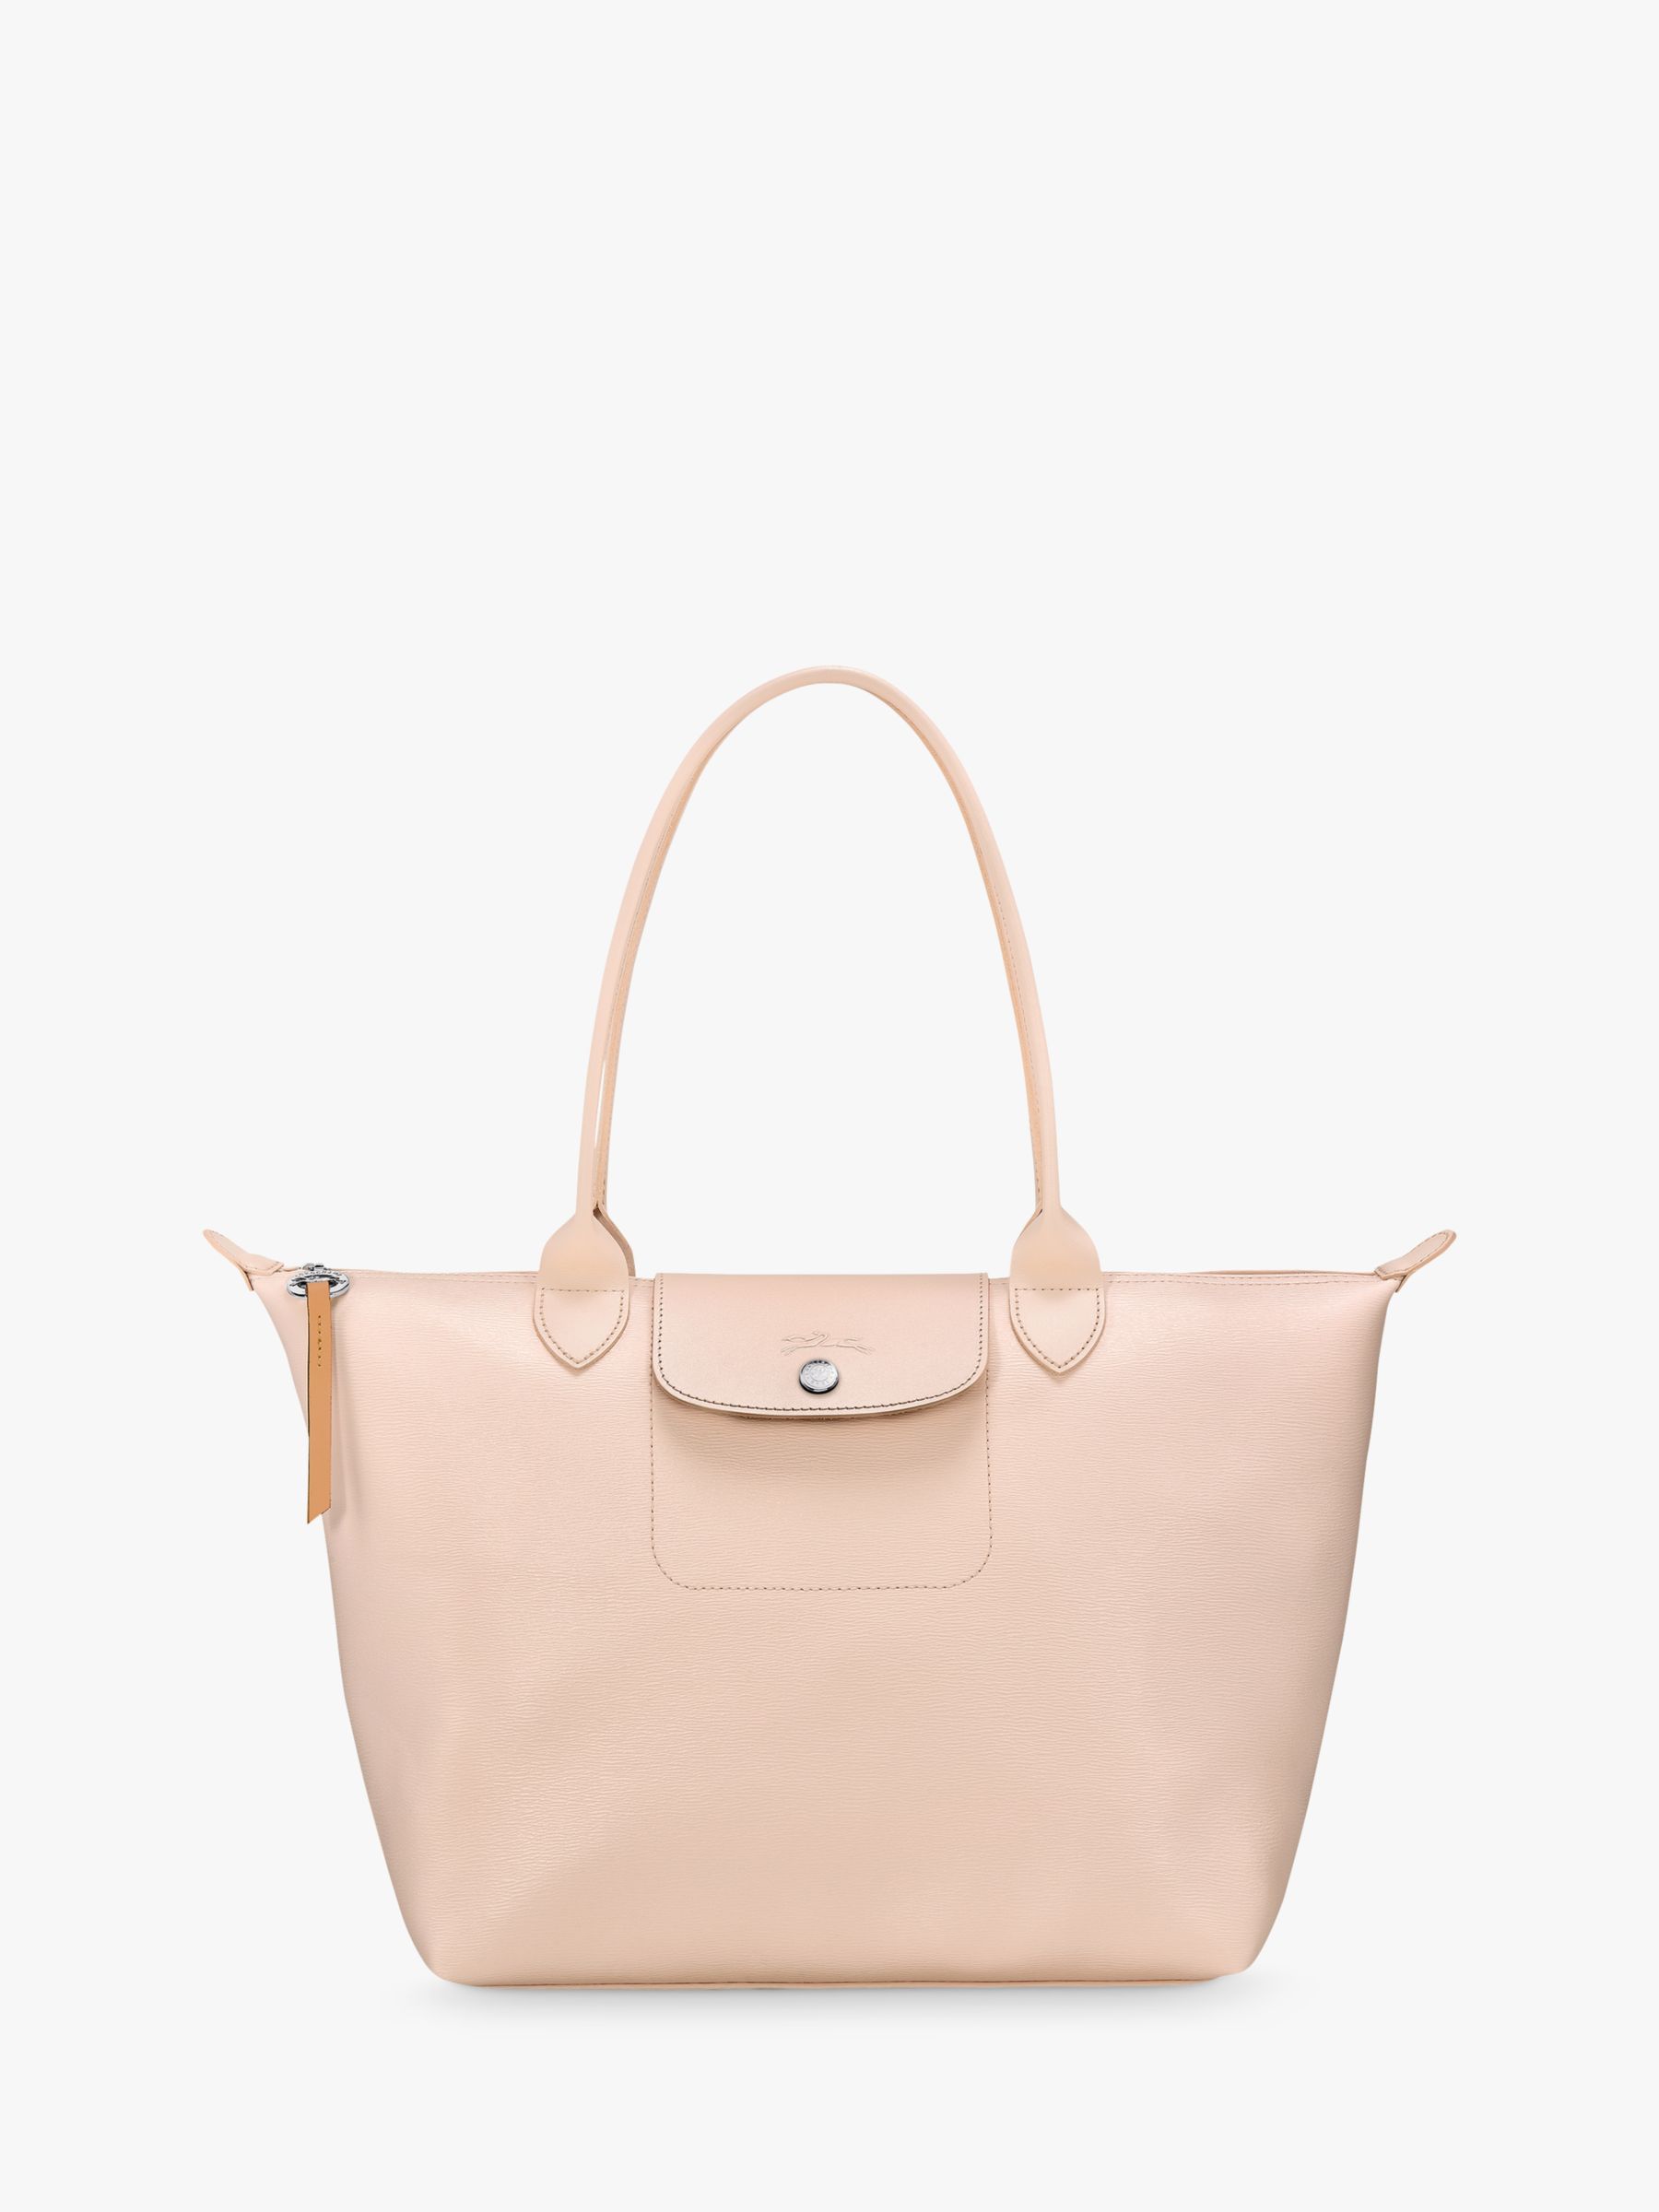 Longchamp Beige Nylon Hobo Bag